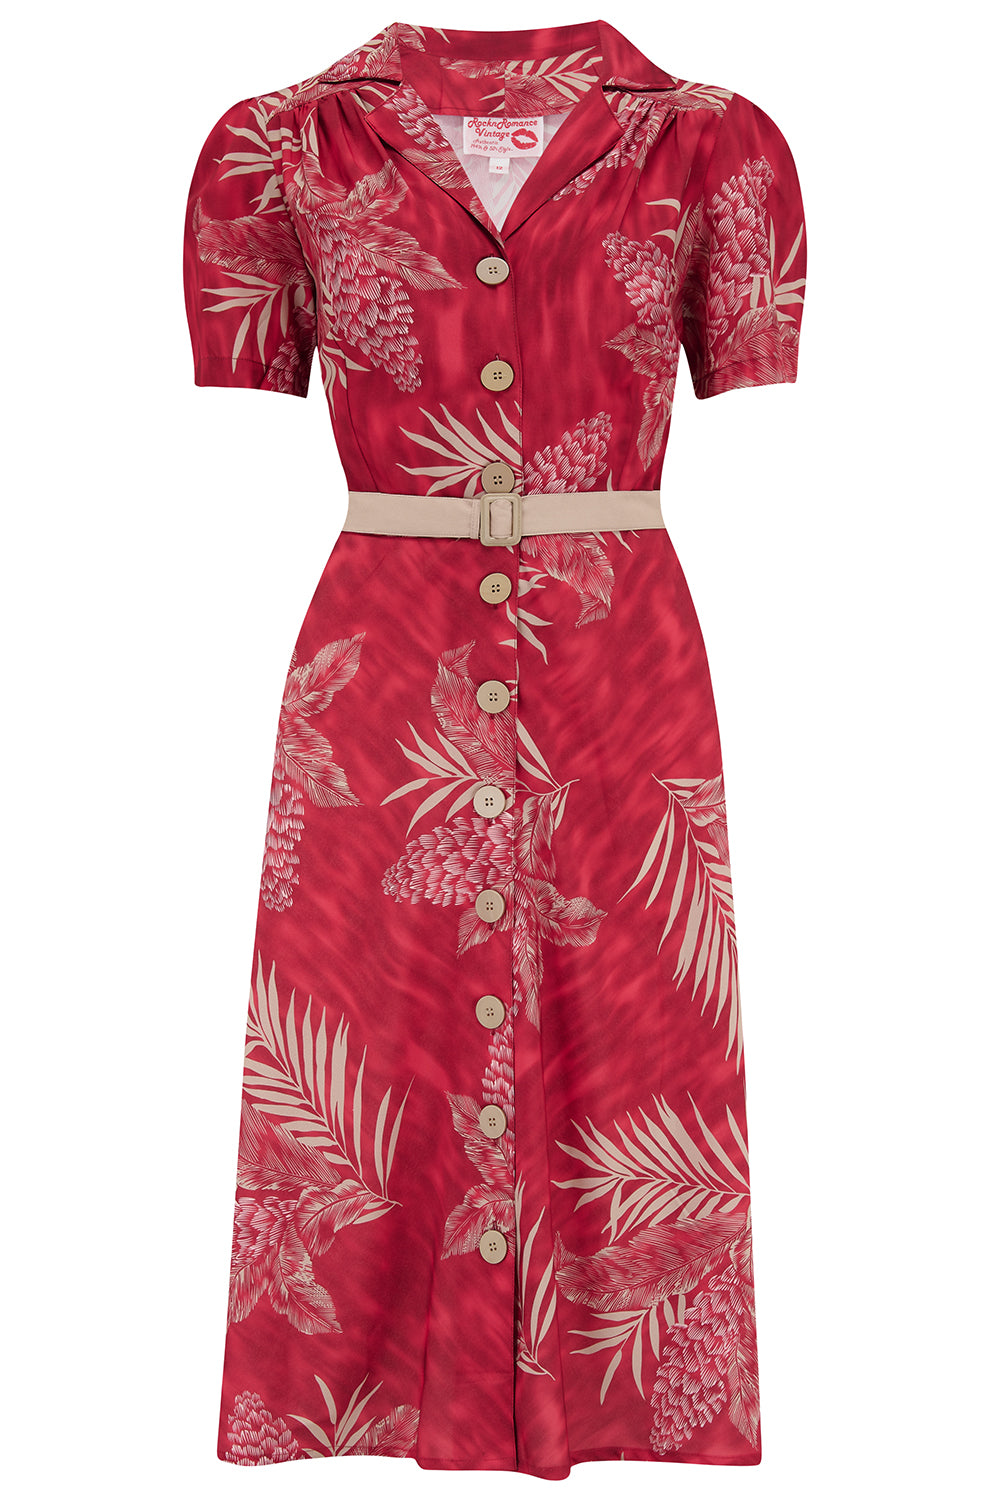 Retro Tiki Dress – Tropical, Hawaiian Dresses Charlene Shirtwaister Dress in Ruby Palm Print True 1950s Vintage Style £49.95 AT vintagedancer.com